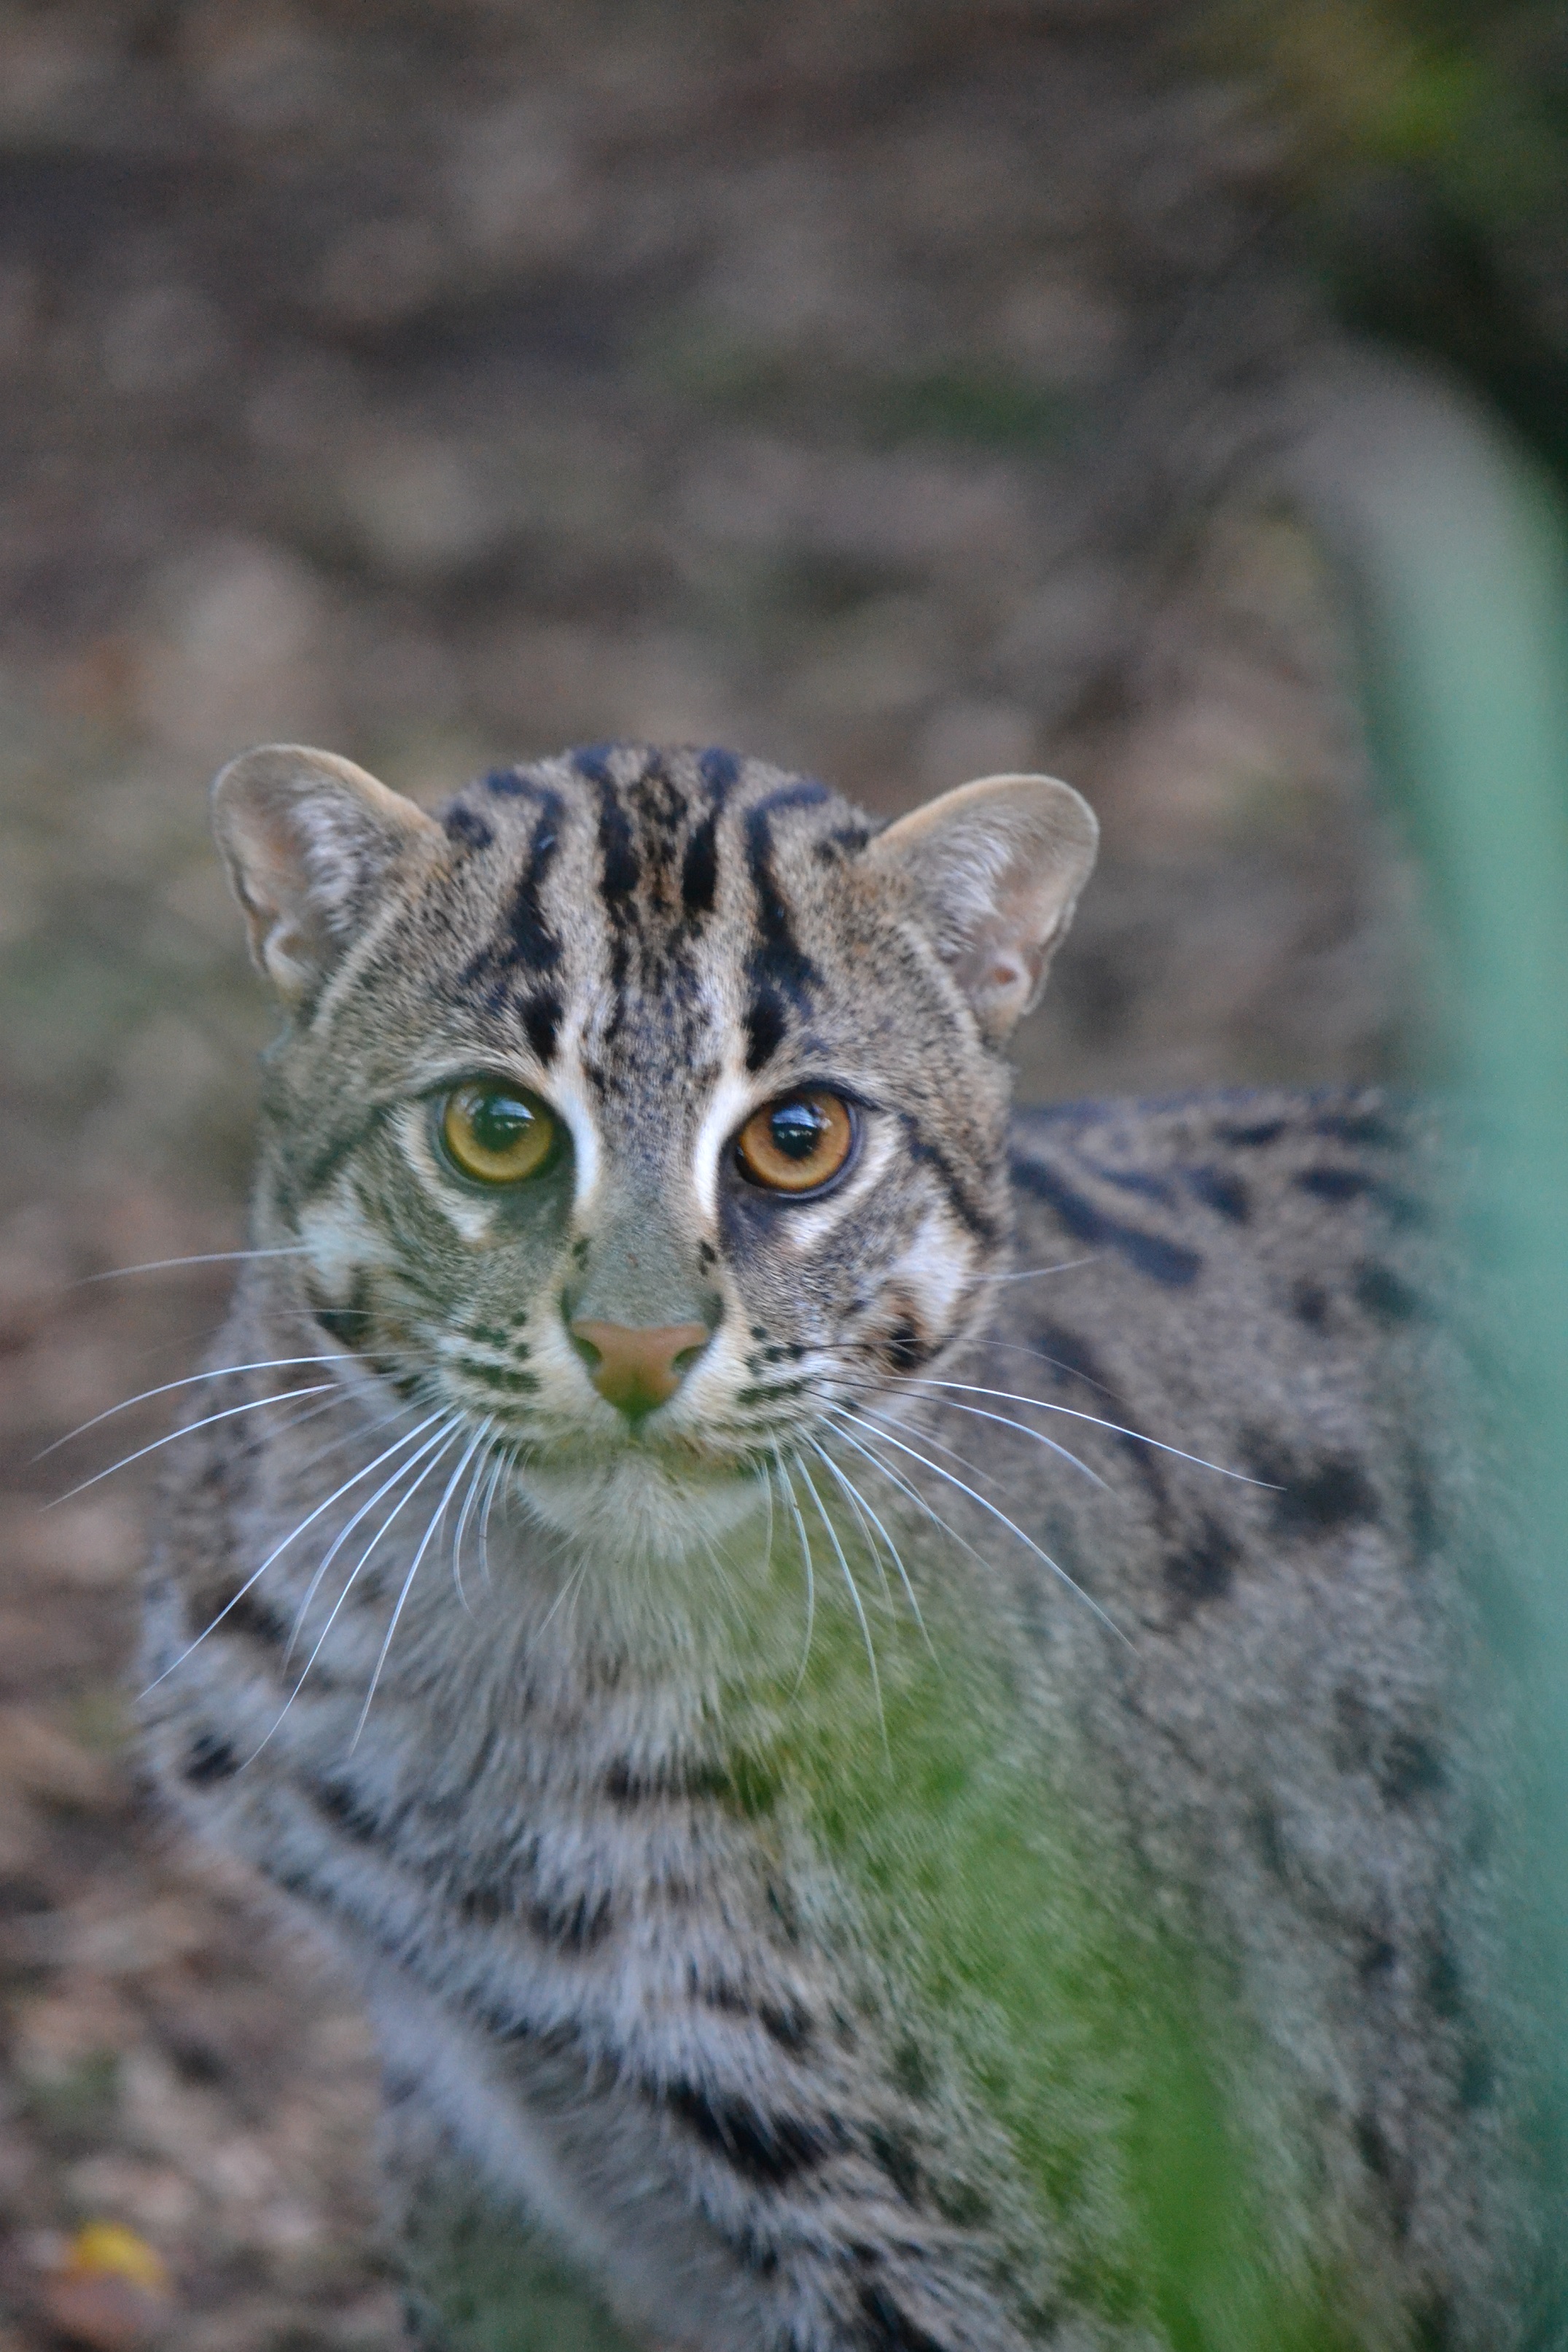 Newquay Zoo's Female fishing cat Freya